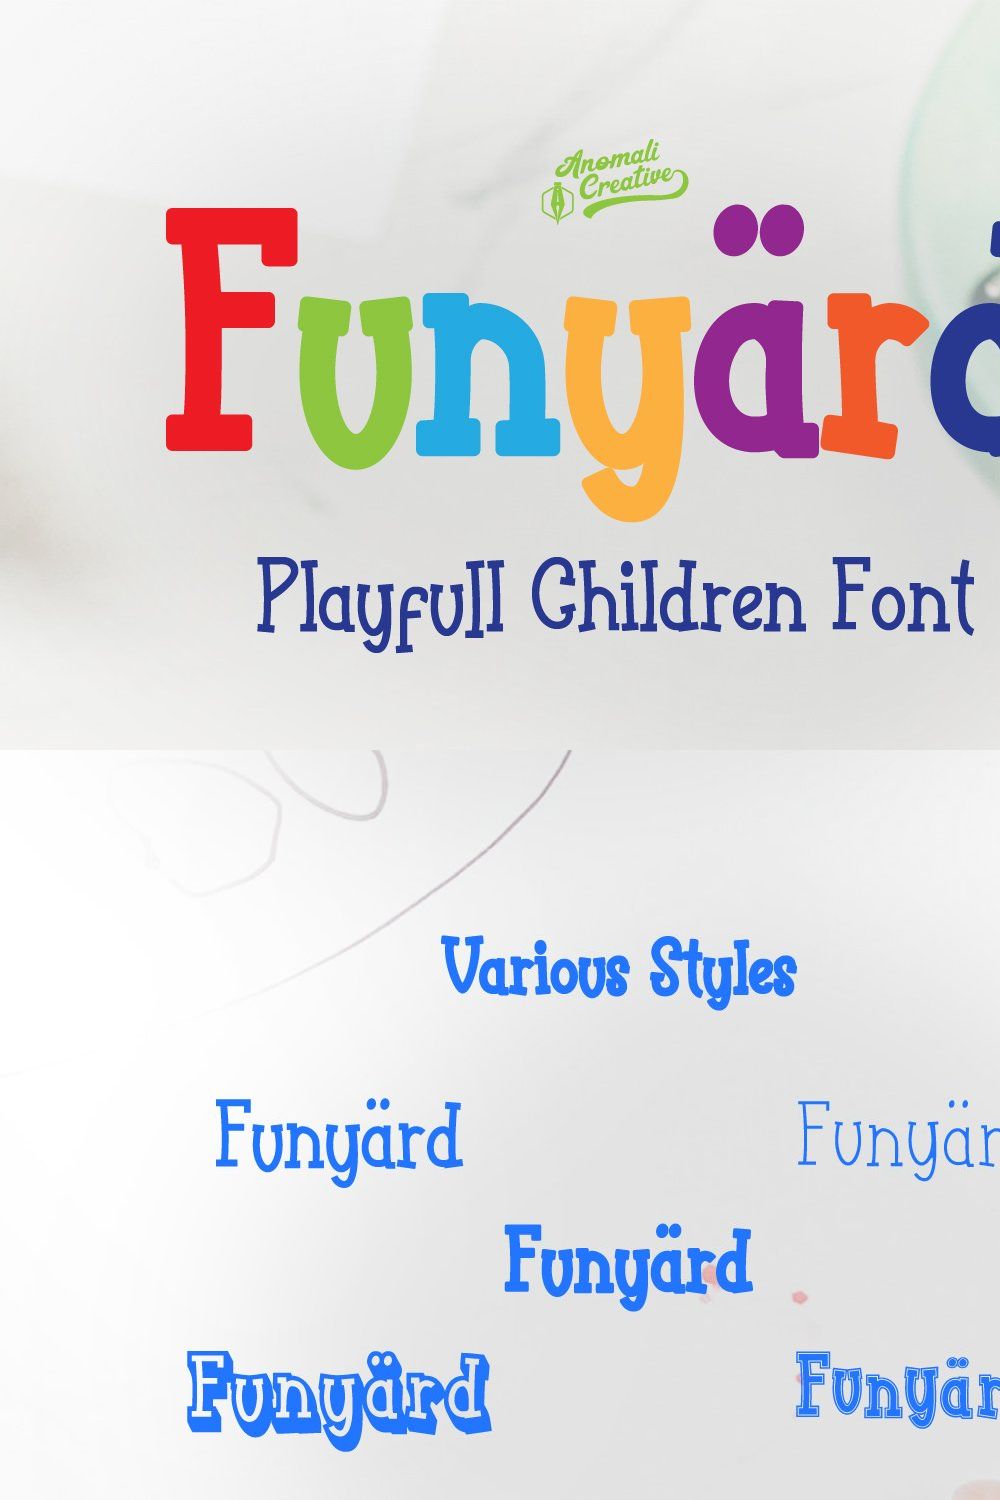 Funyard - Playful Cute Kids Font pinterest preview image.